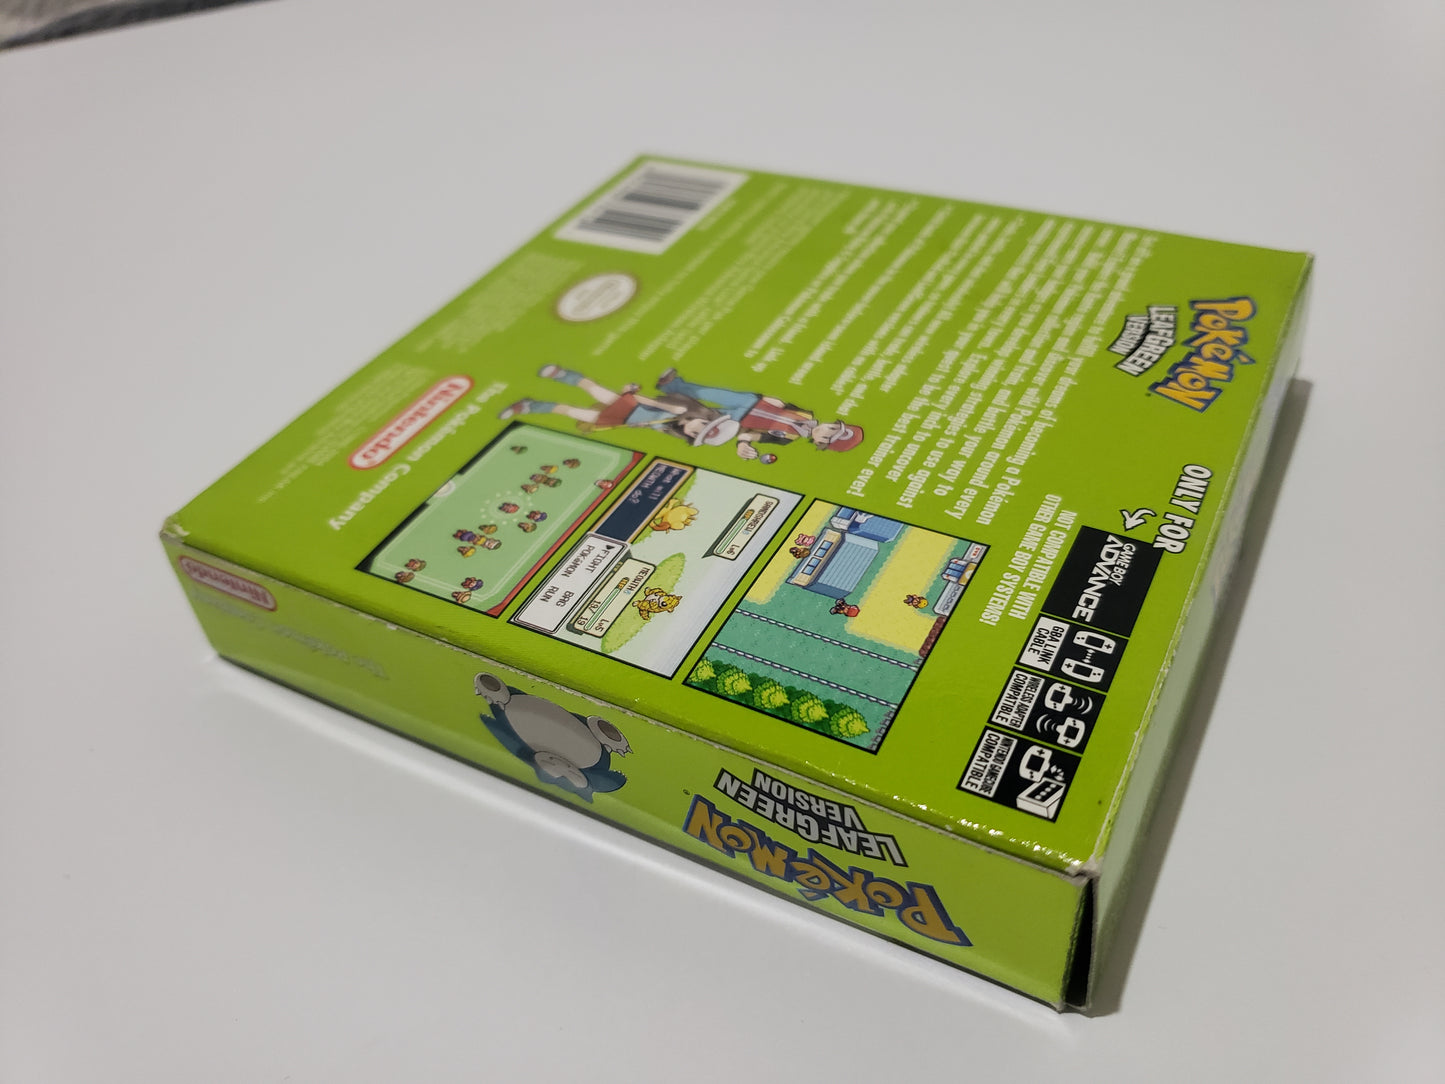 Pokemon LeafGreen Completo (CiB) Nintendo Game Boy Advance